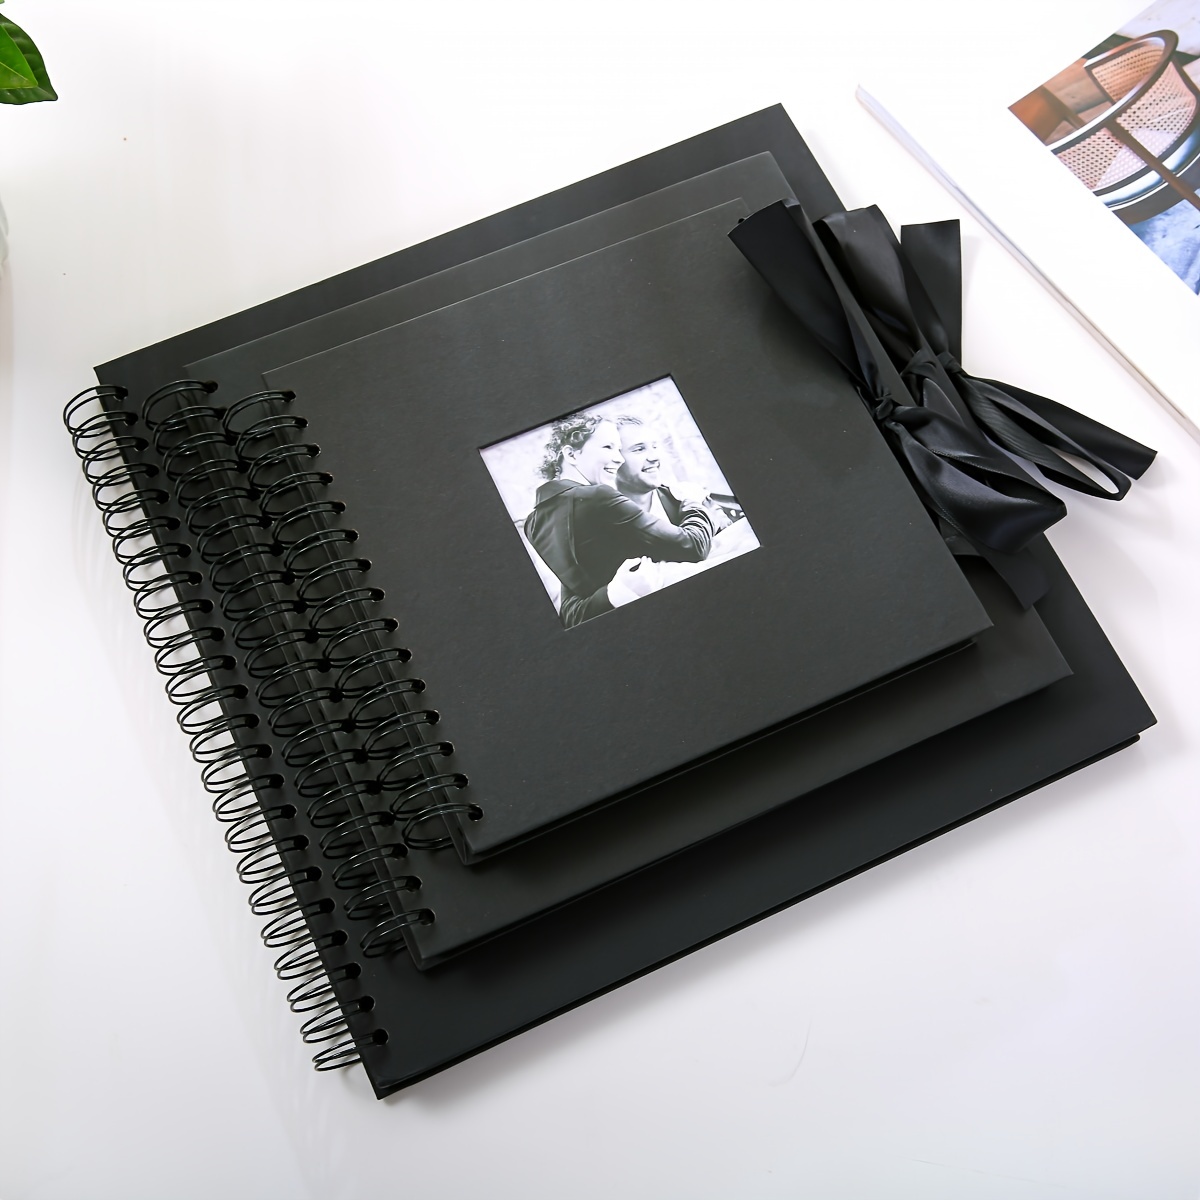 60 Pages Large Photo Albums Self Adhesive Scrapbook Paper DIY